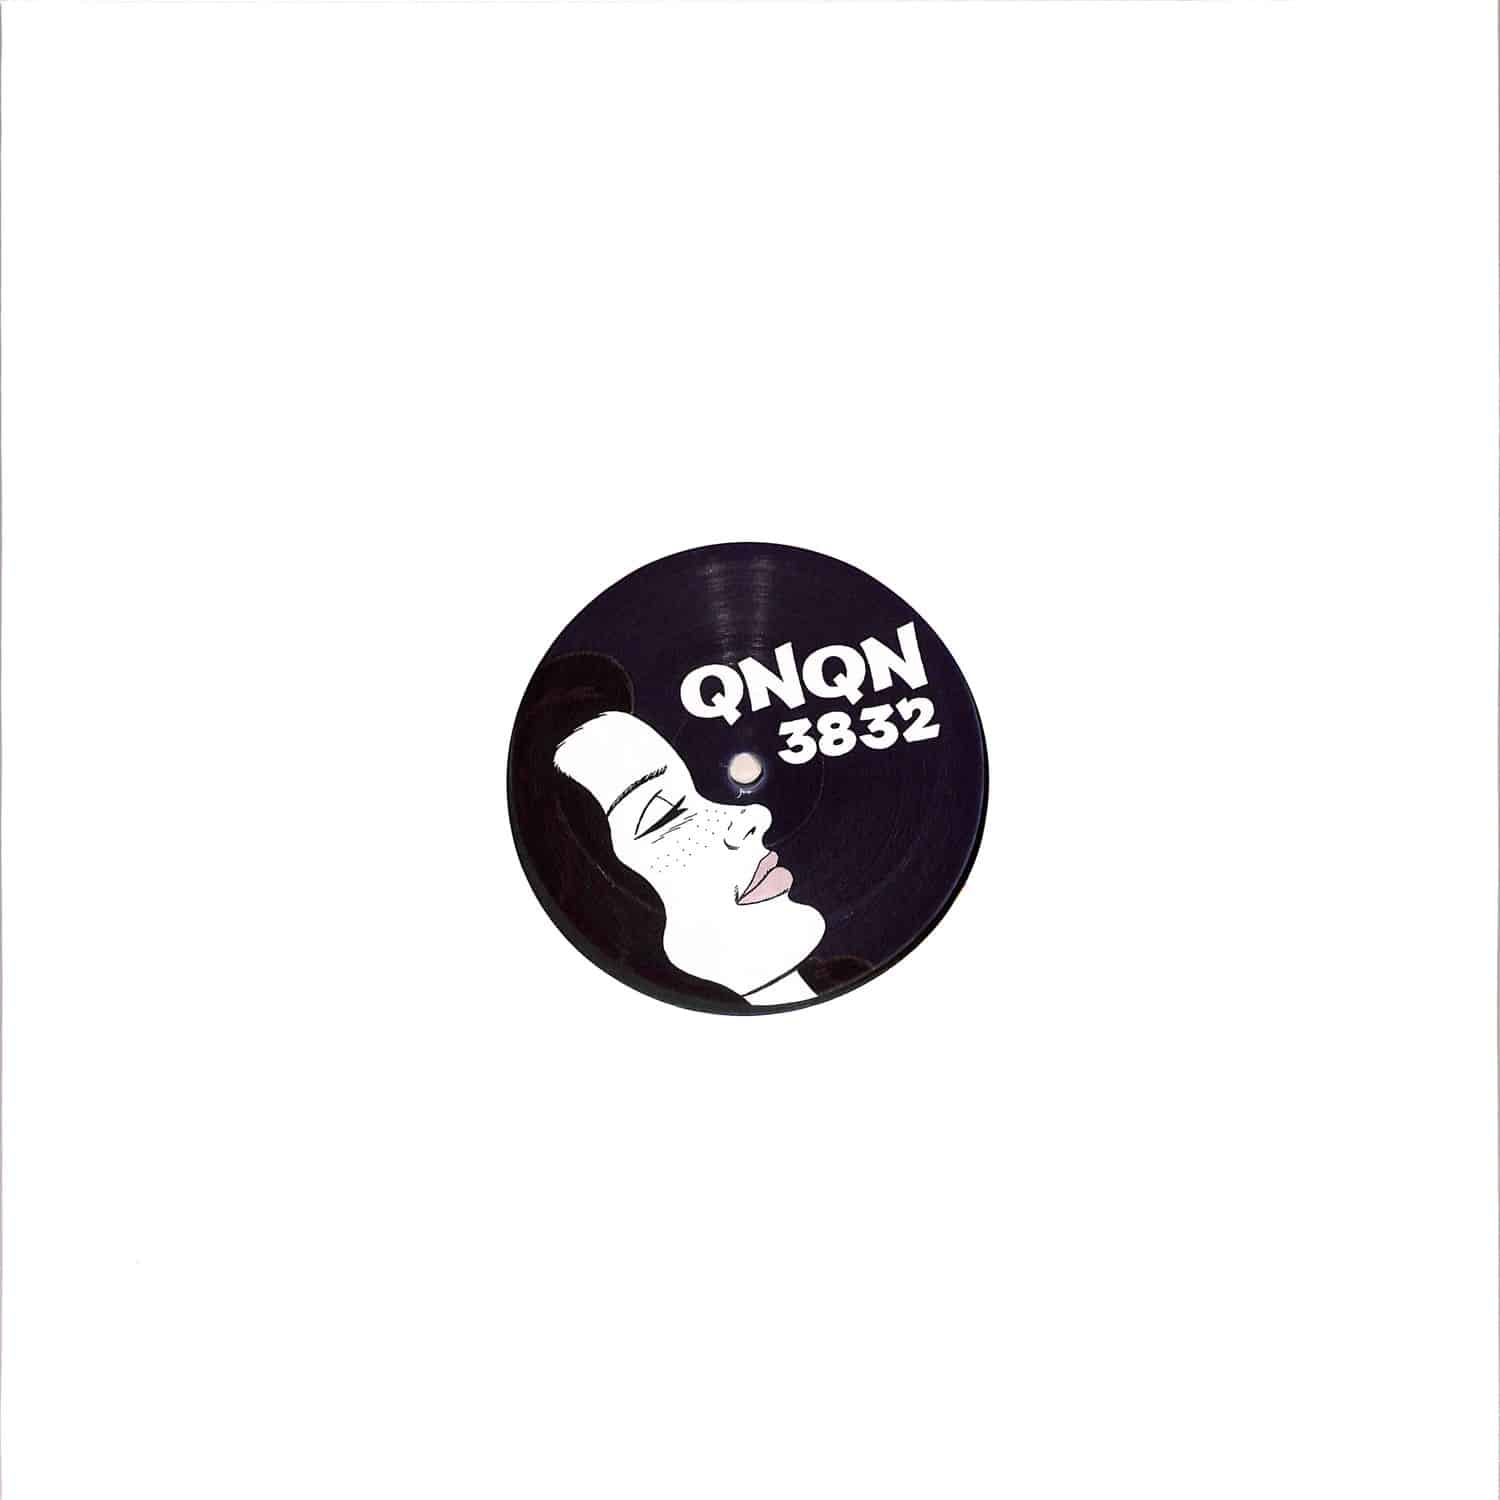 QNQN - QNQN 3832 